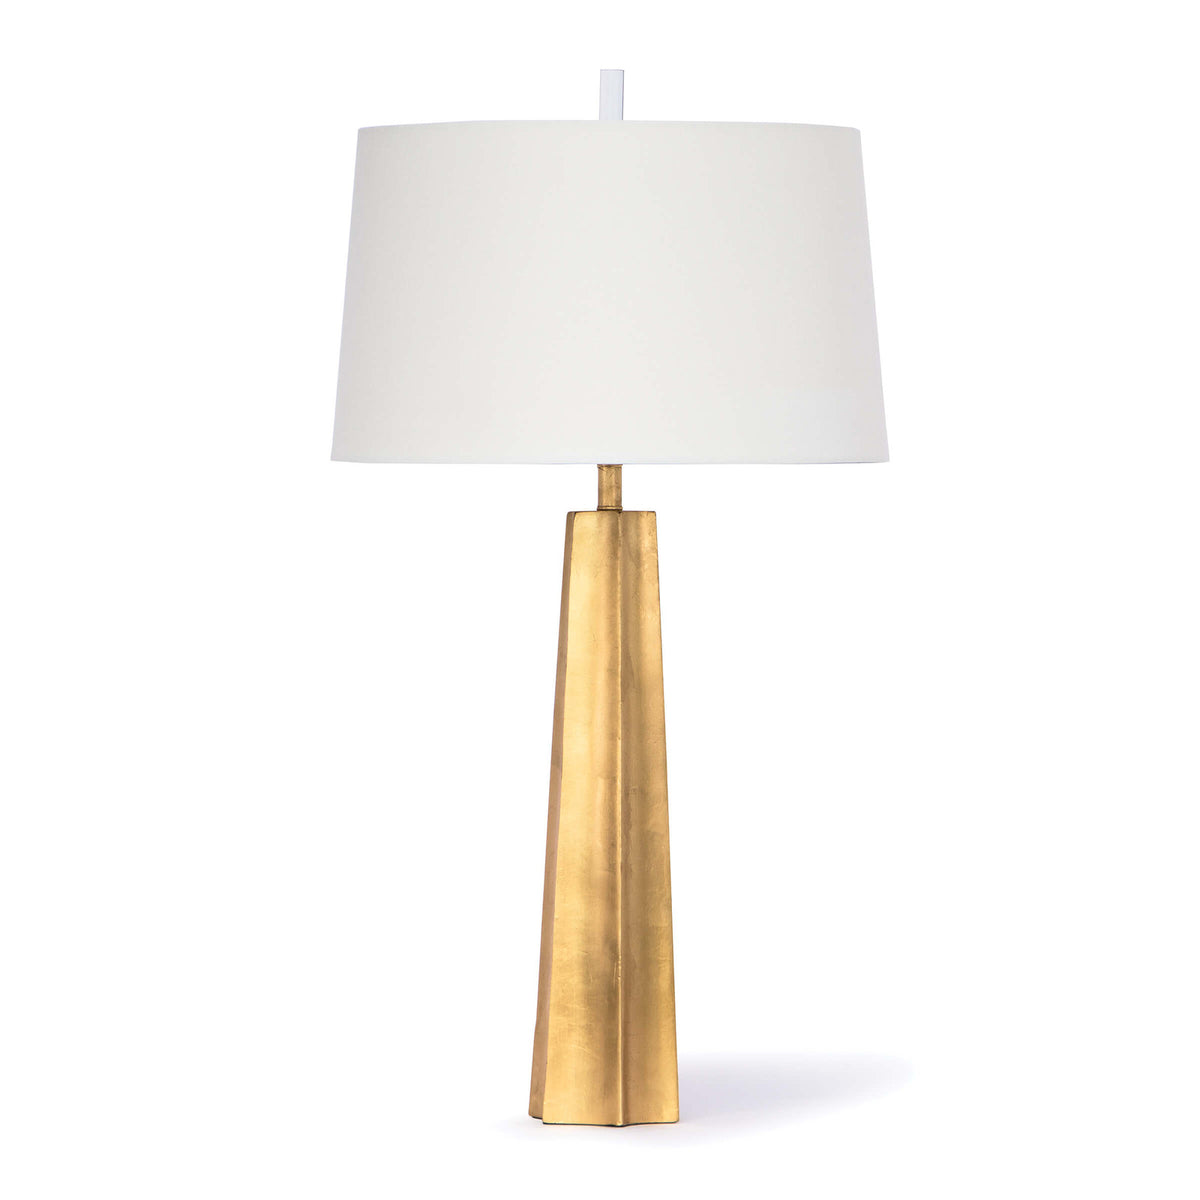 Celine Table Lamp - Gold